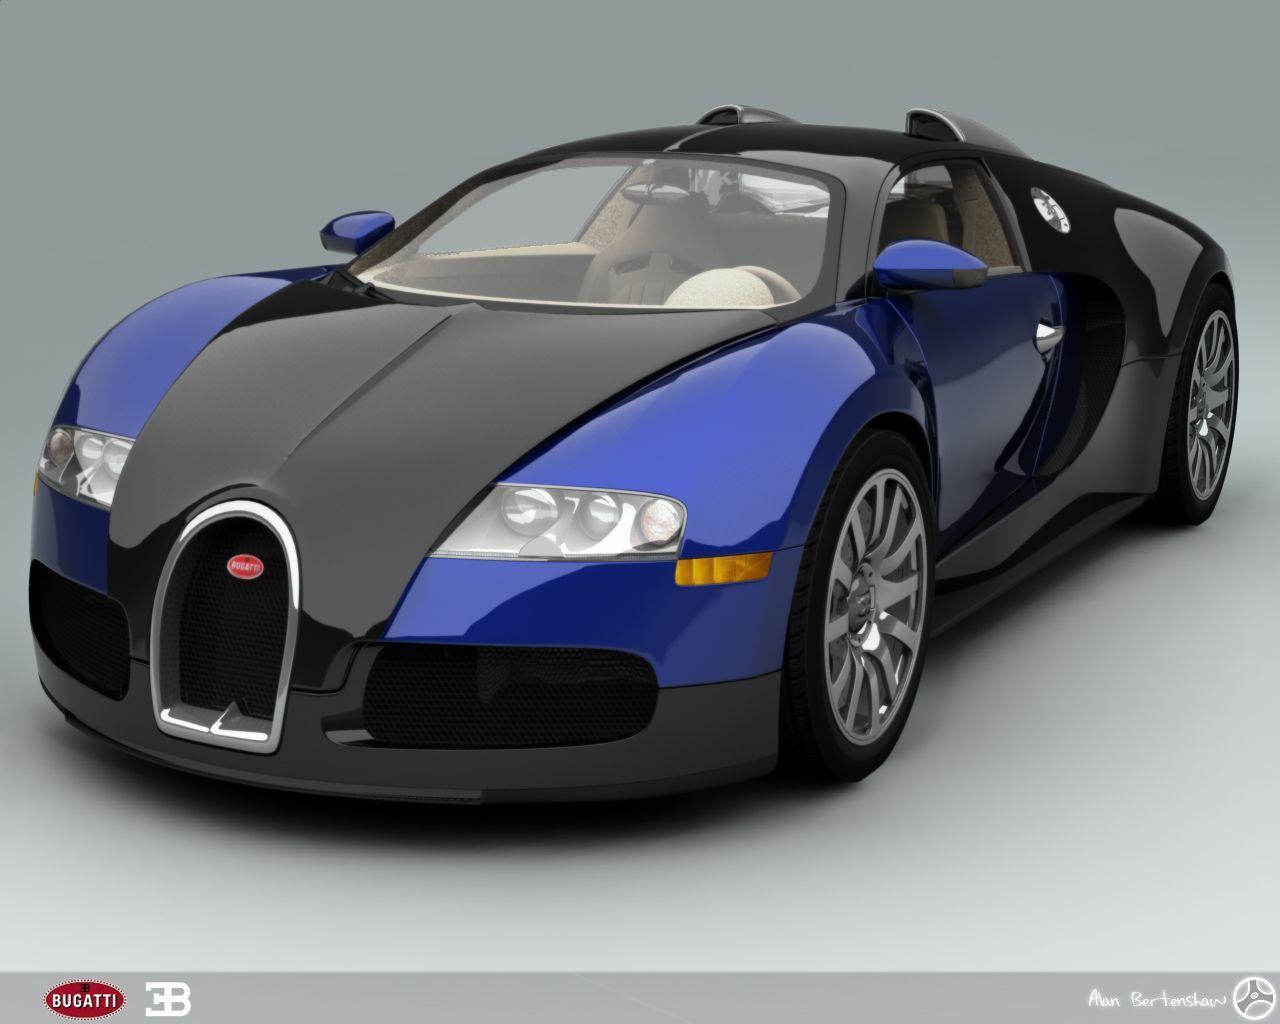 Bugatti Veyron Background Pics 12900 Image. wallgraf